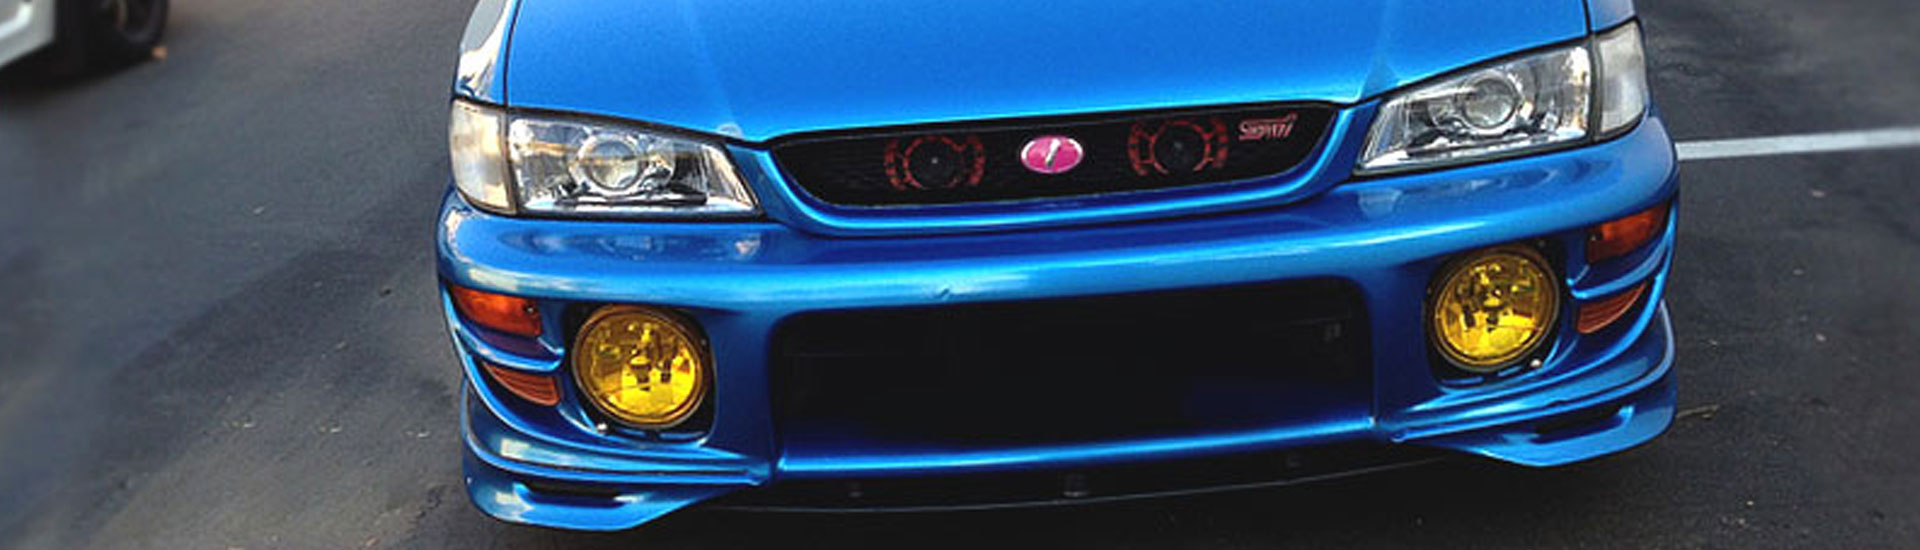 Blue Subaru with tinted fog lights